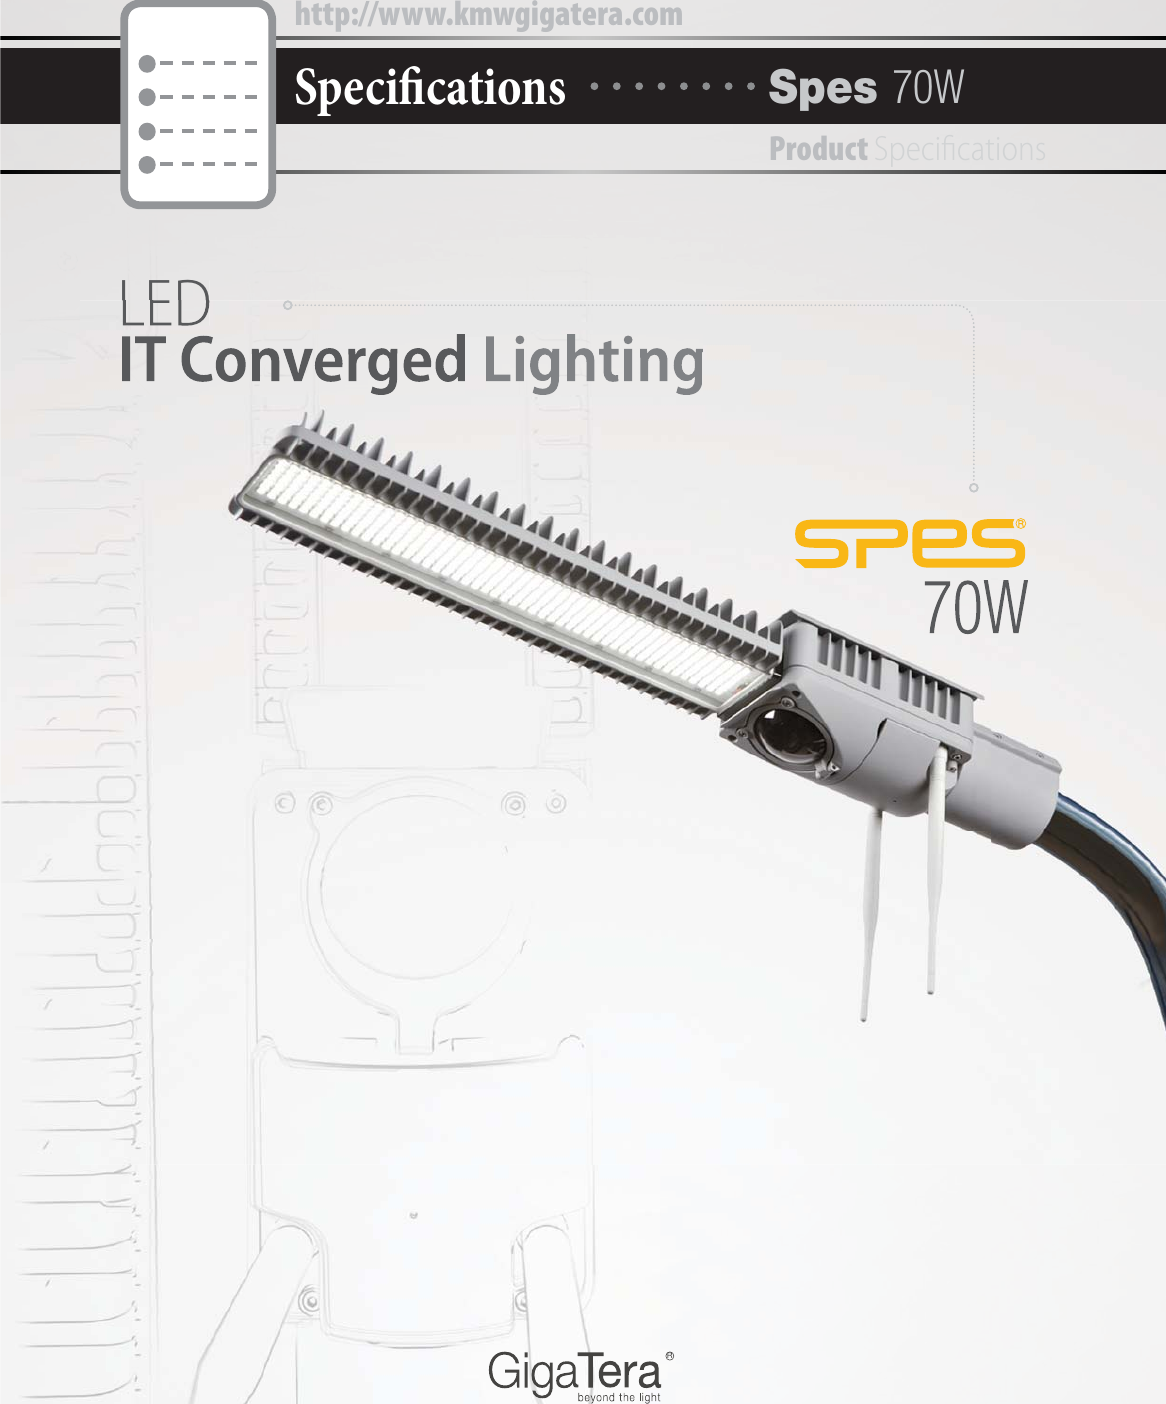 RIT Converged LightingLED70WSpes 70WProduct SpecicationsSpecicationshttp://www.kmwgigatera.com